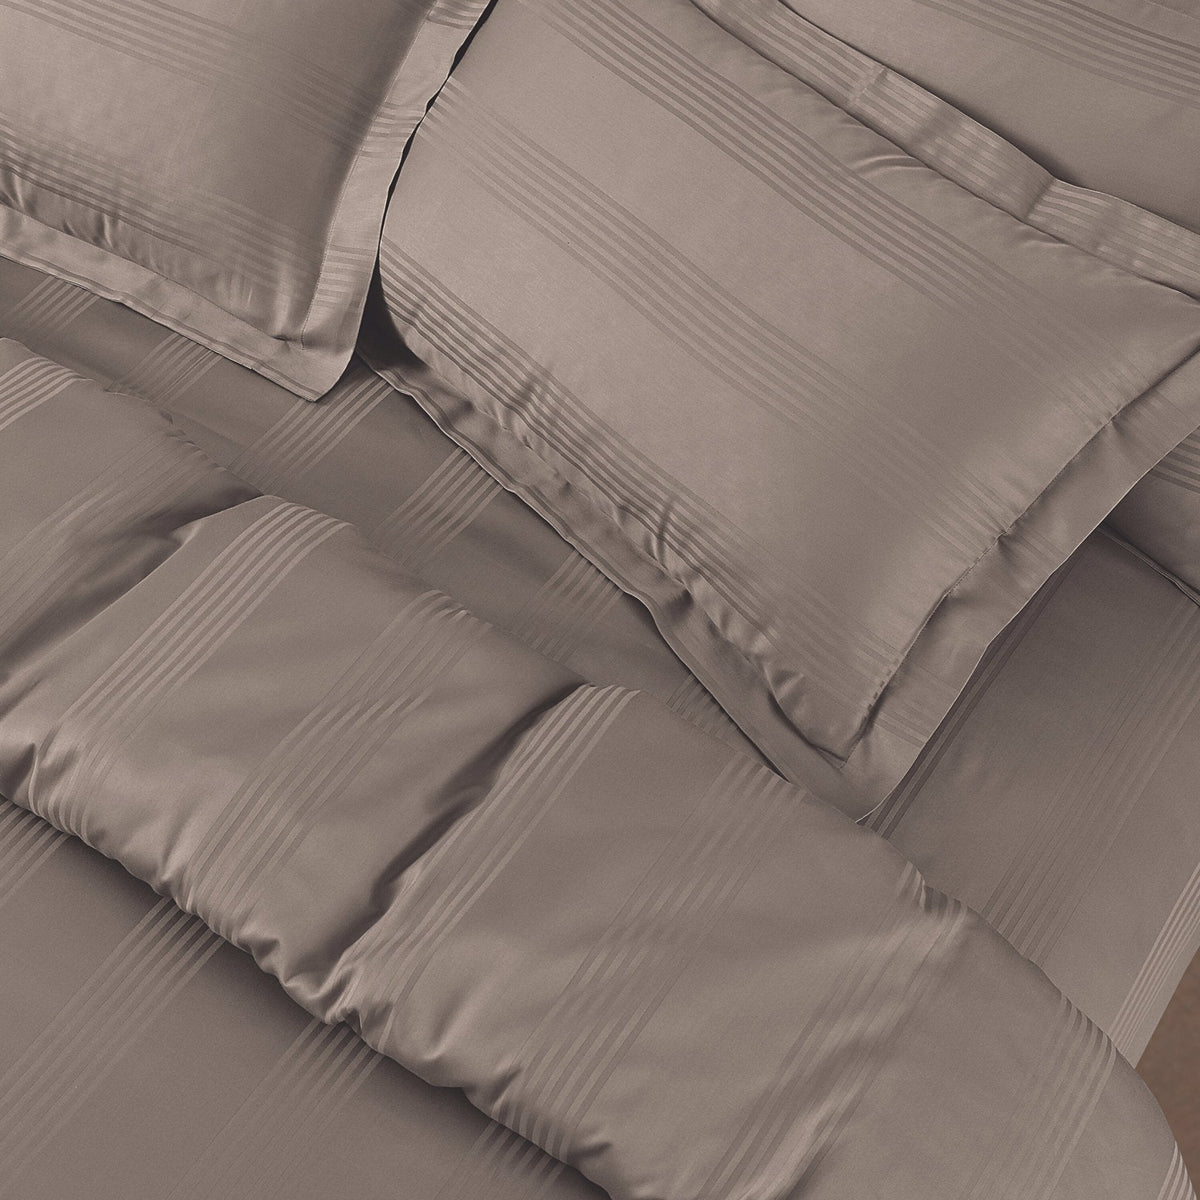 Malako Turin Jacquard Taupe Brown Stripes 500 TC 100% Cotton King Size Bed Sheet - MALAKO